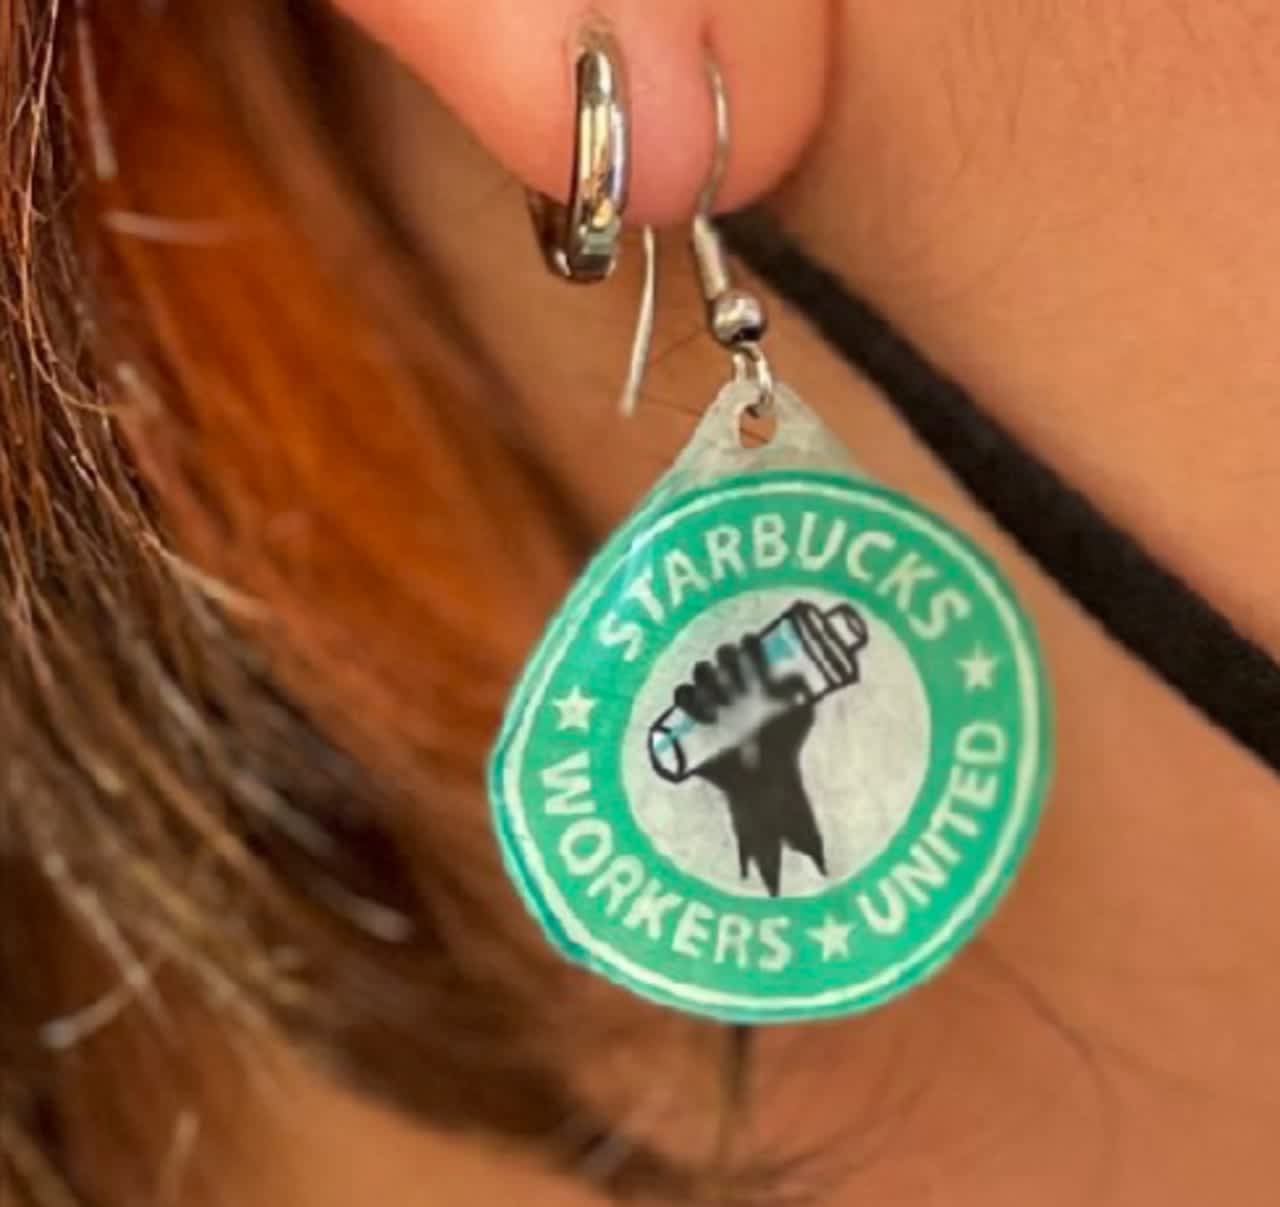 Starbucks Workers United earring